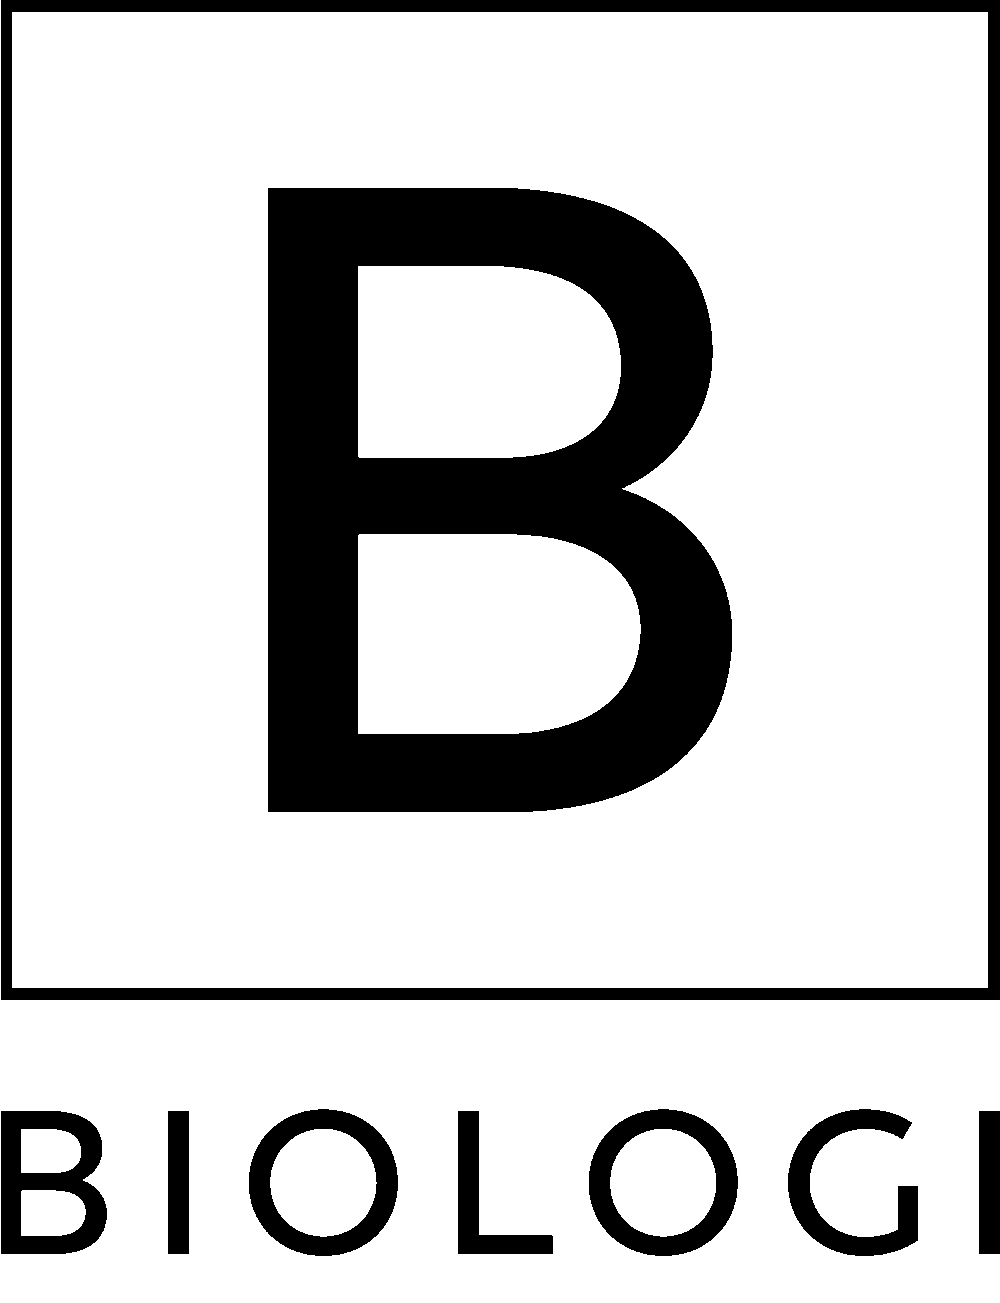 Explore Biologi range